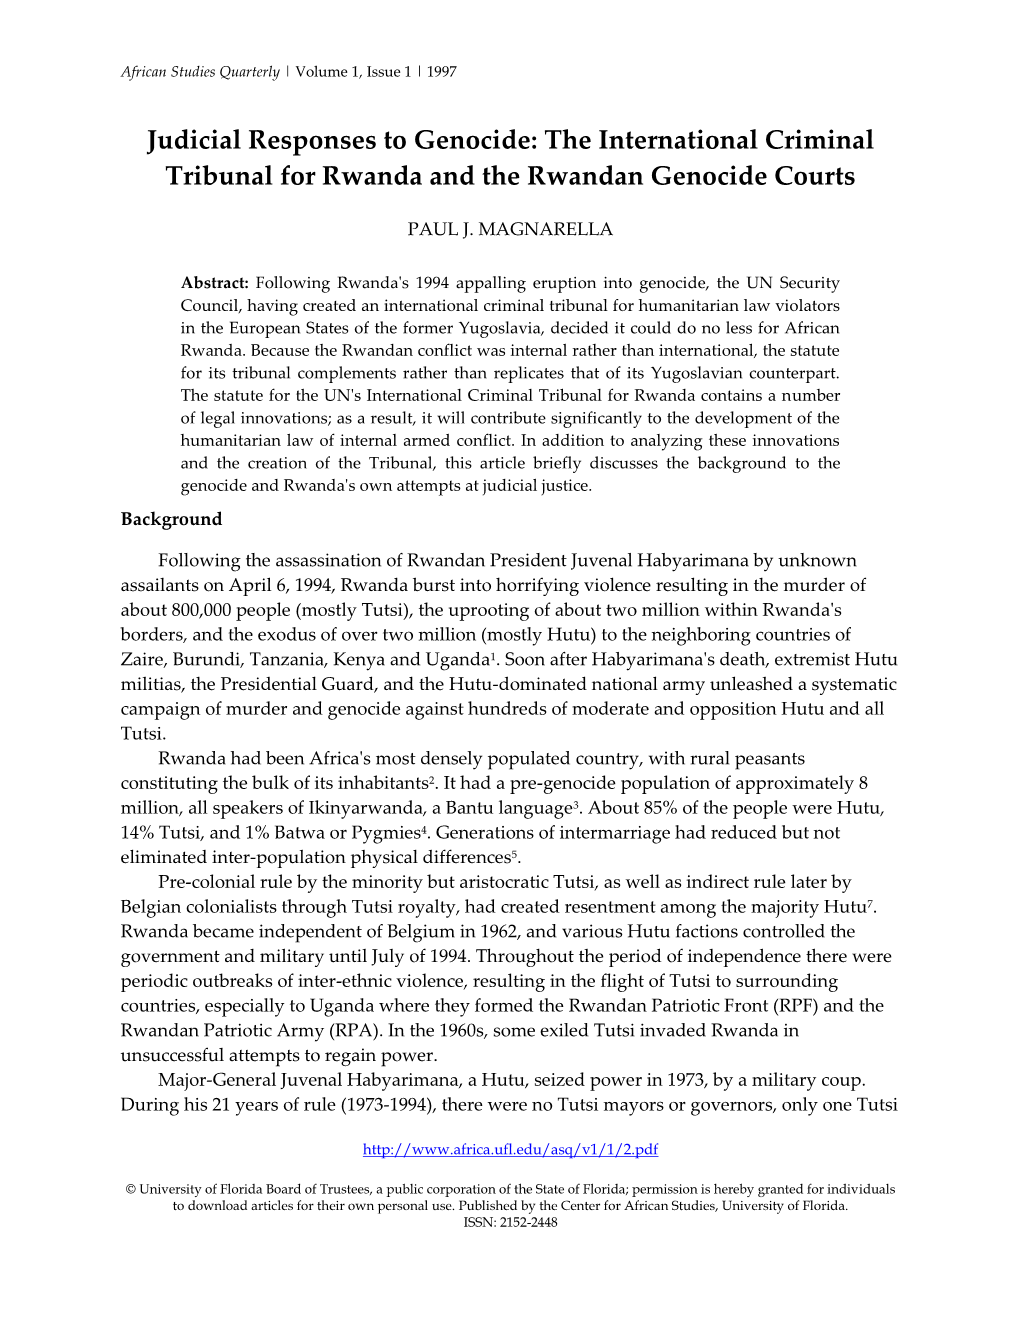 The International Criminal Tribunal for Rwanda and the Rwandan Genocide Courts